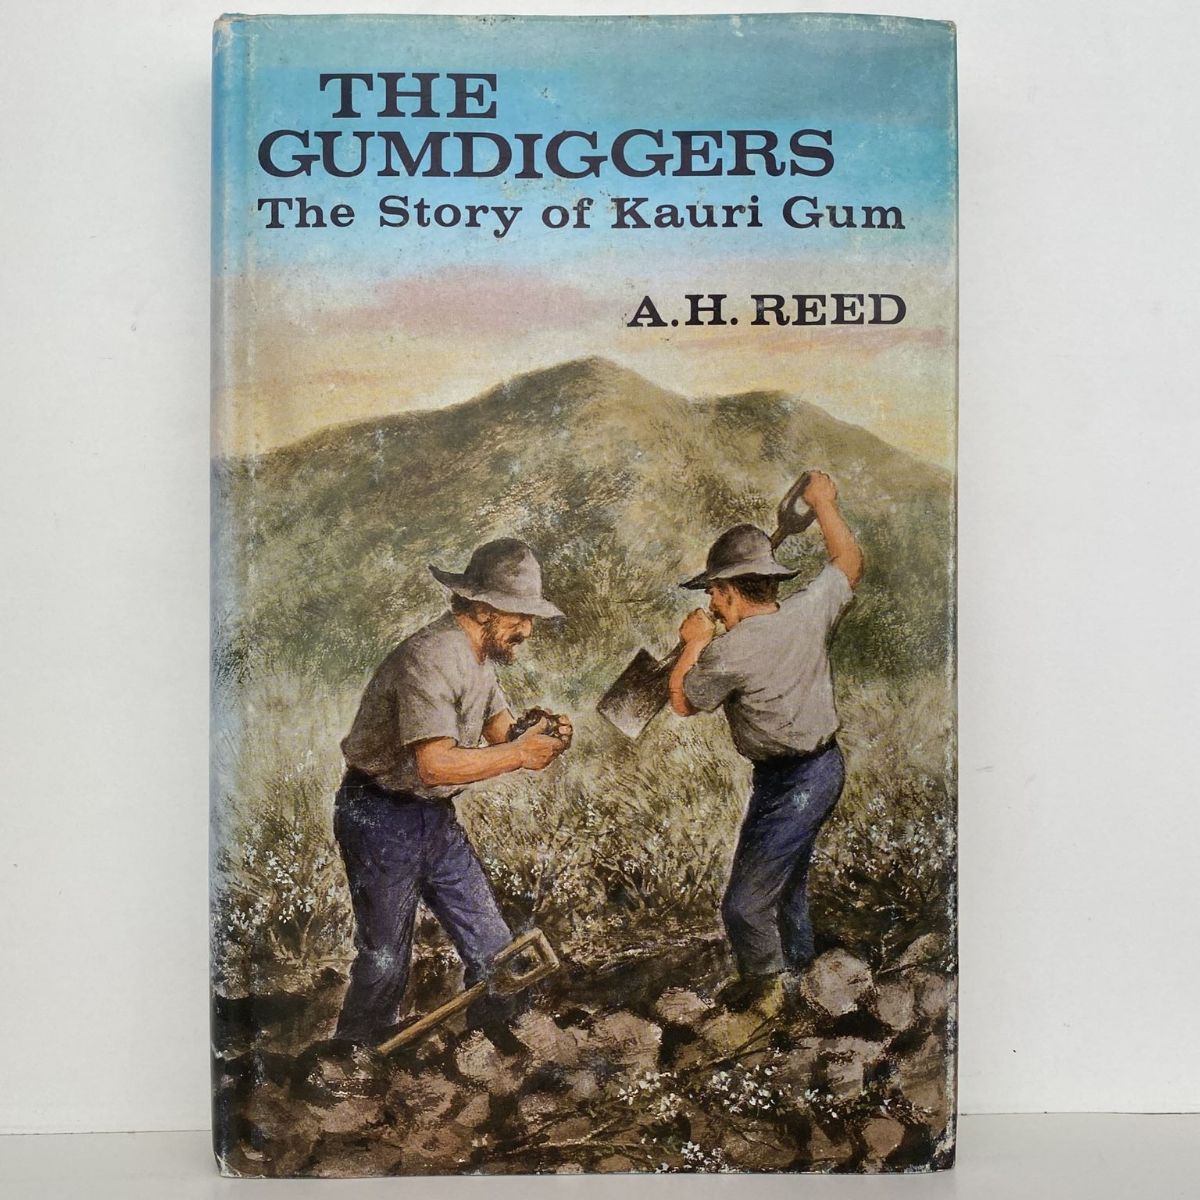 THE GUMDIGGERS: The Story of Kauri Gum